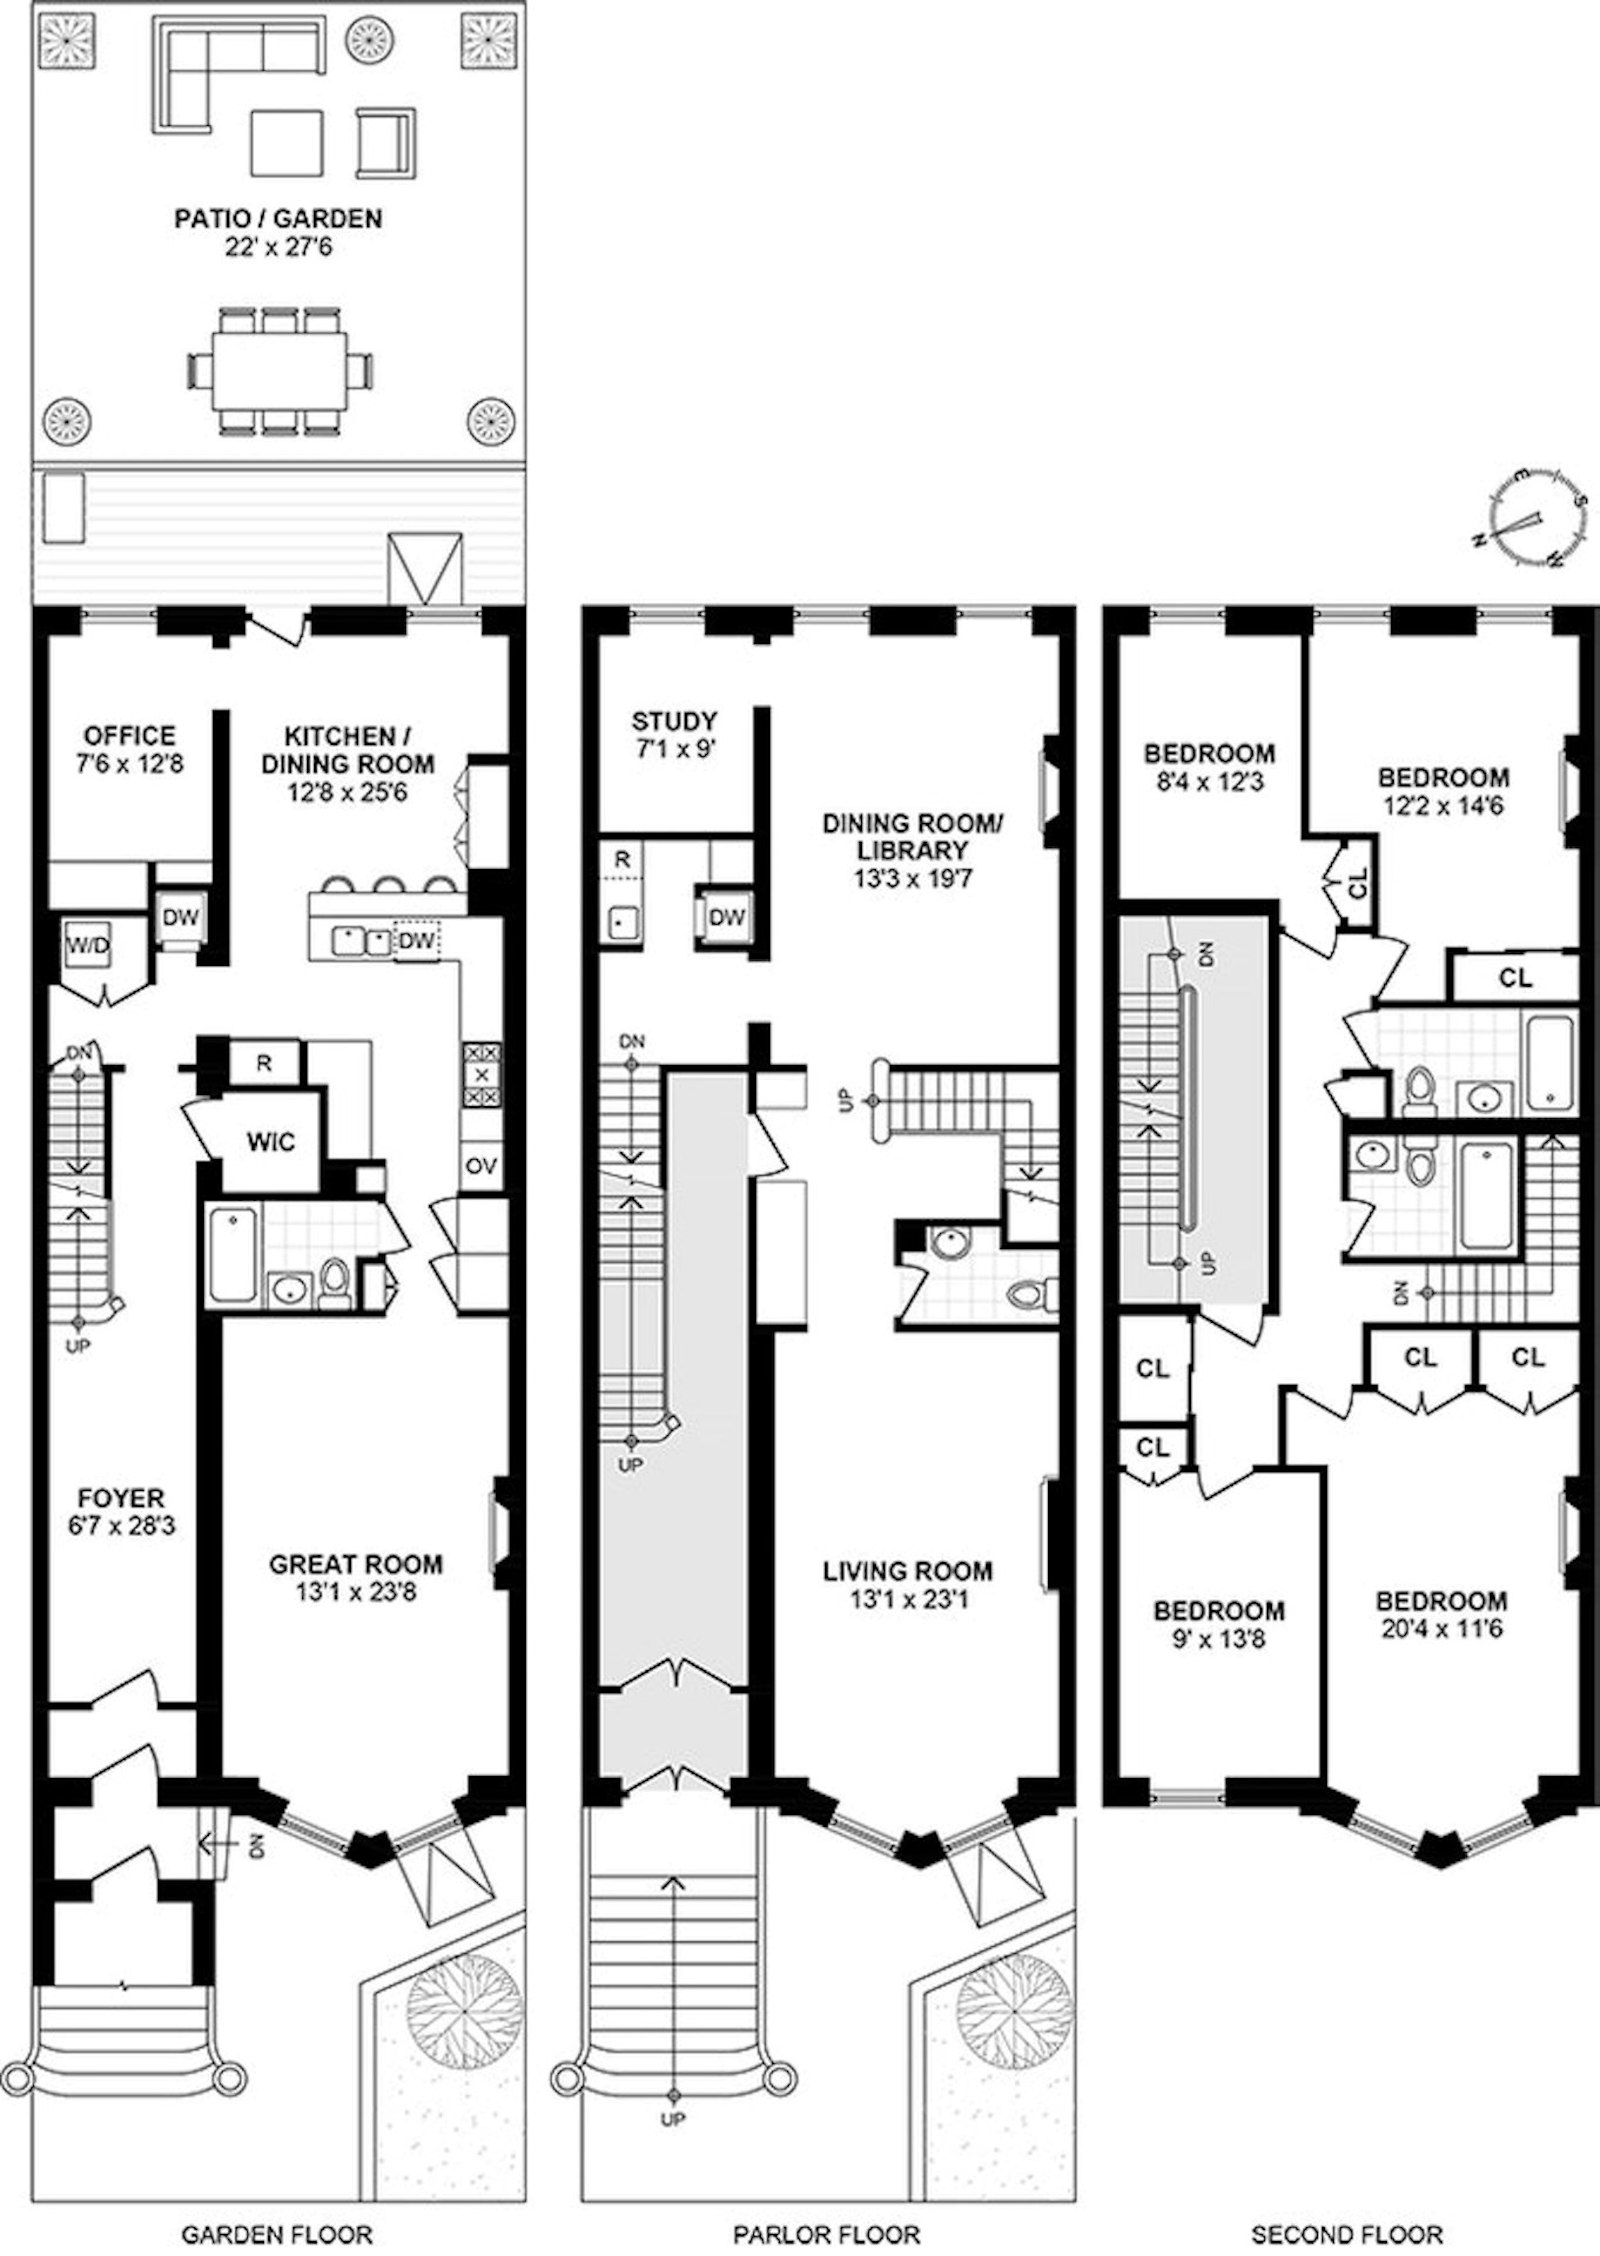 Floorplan for 87 8th Avenue, TRIPLEX